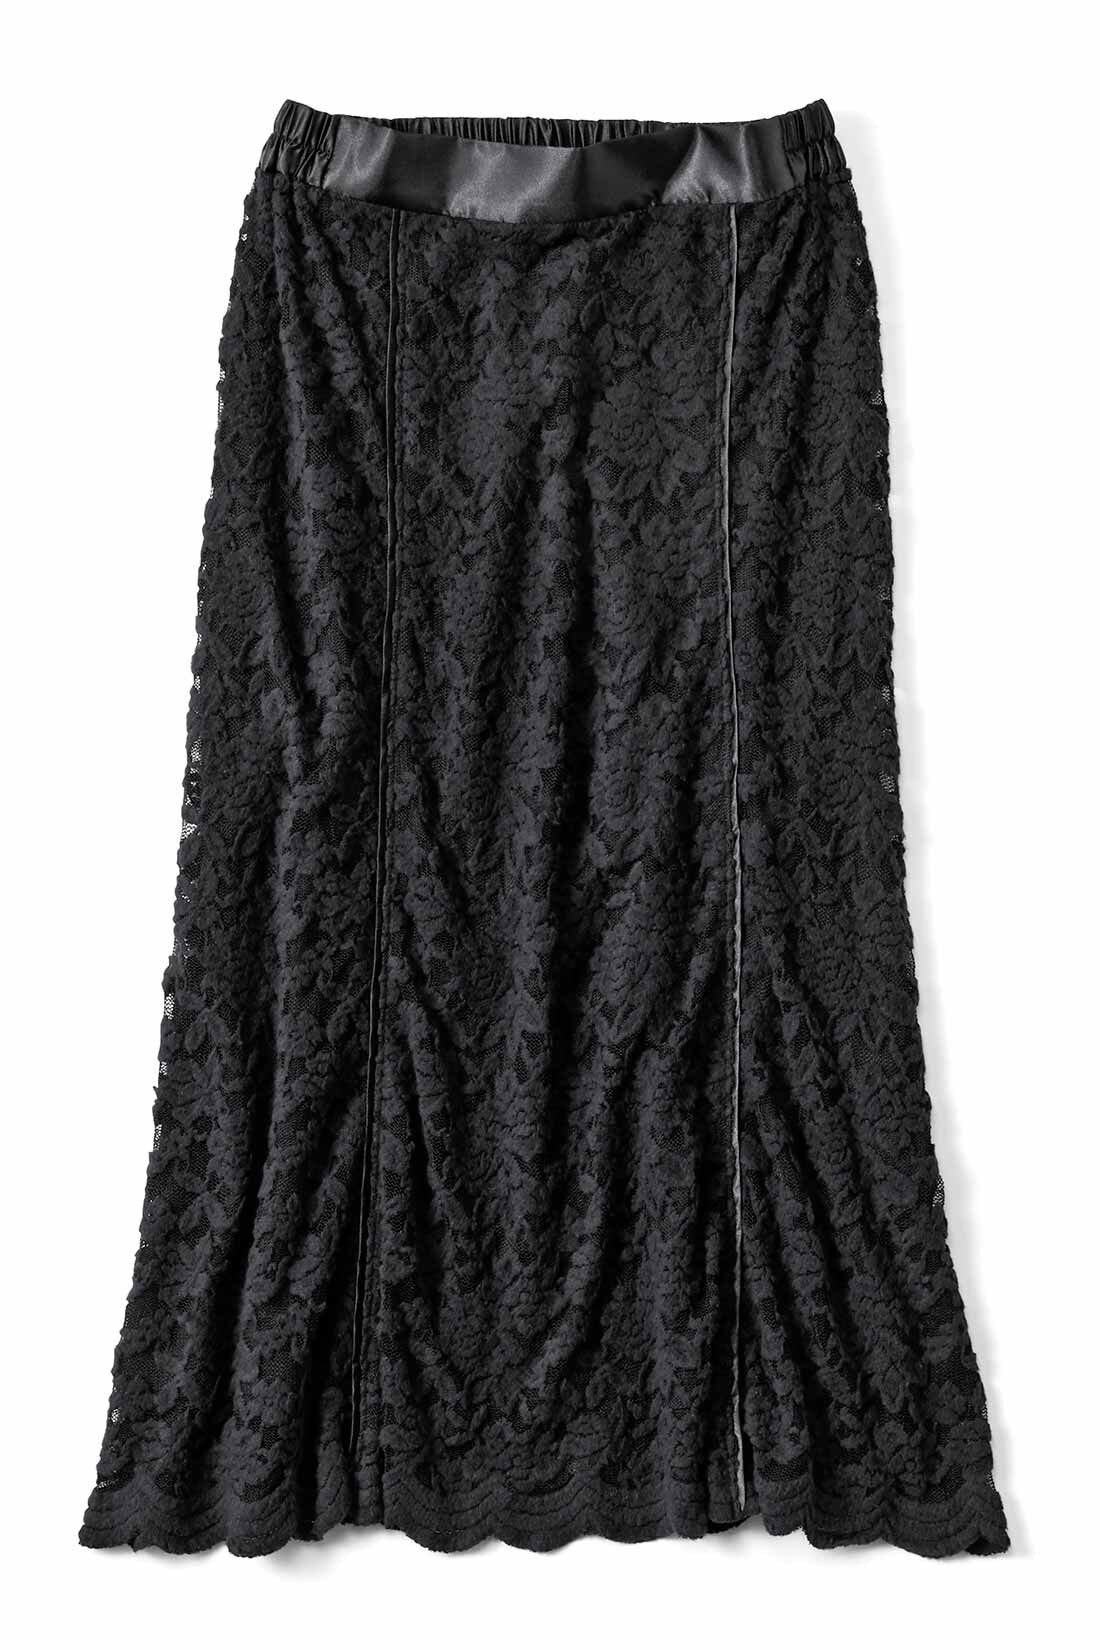 IEDIT[イディット]　帯電防止インナーがうれしい 起毛レーススカート〈ブラック〉|ブラック サテンテープの切り替えが作るきれいな縦長シルエットが魅力。